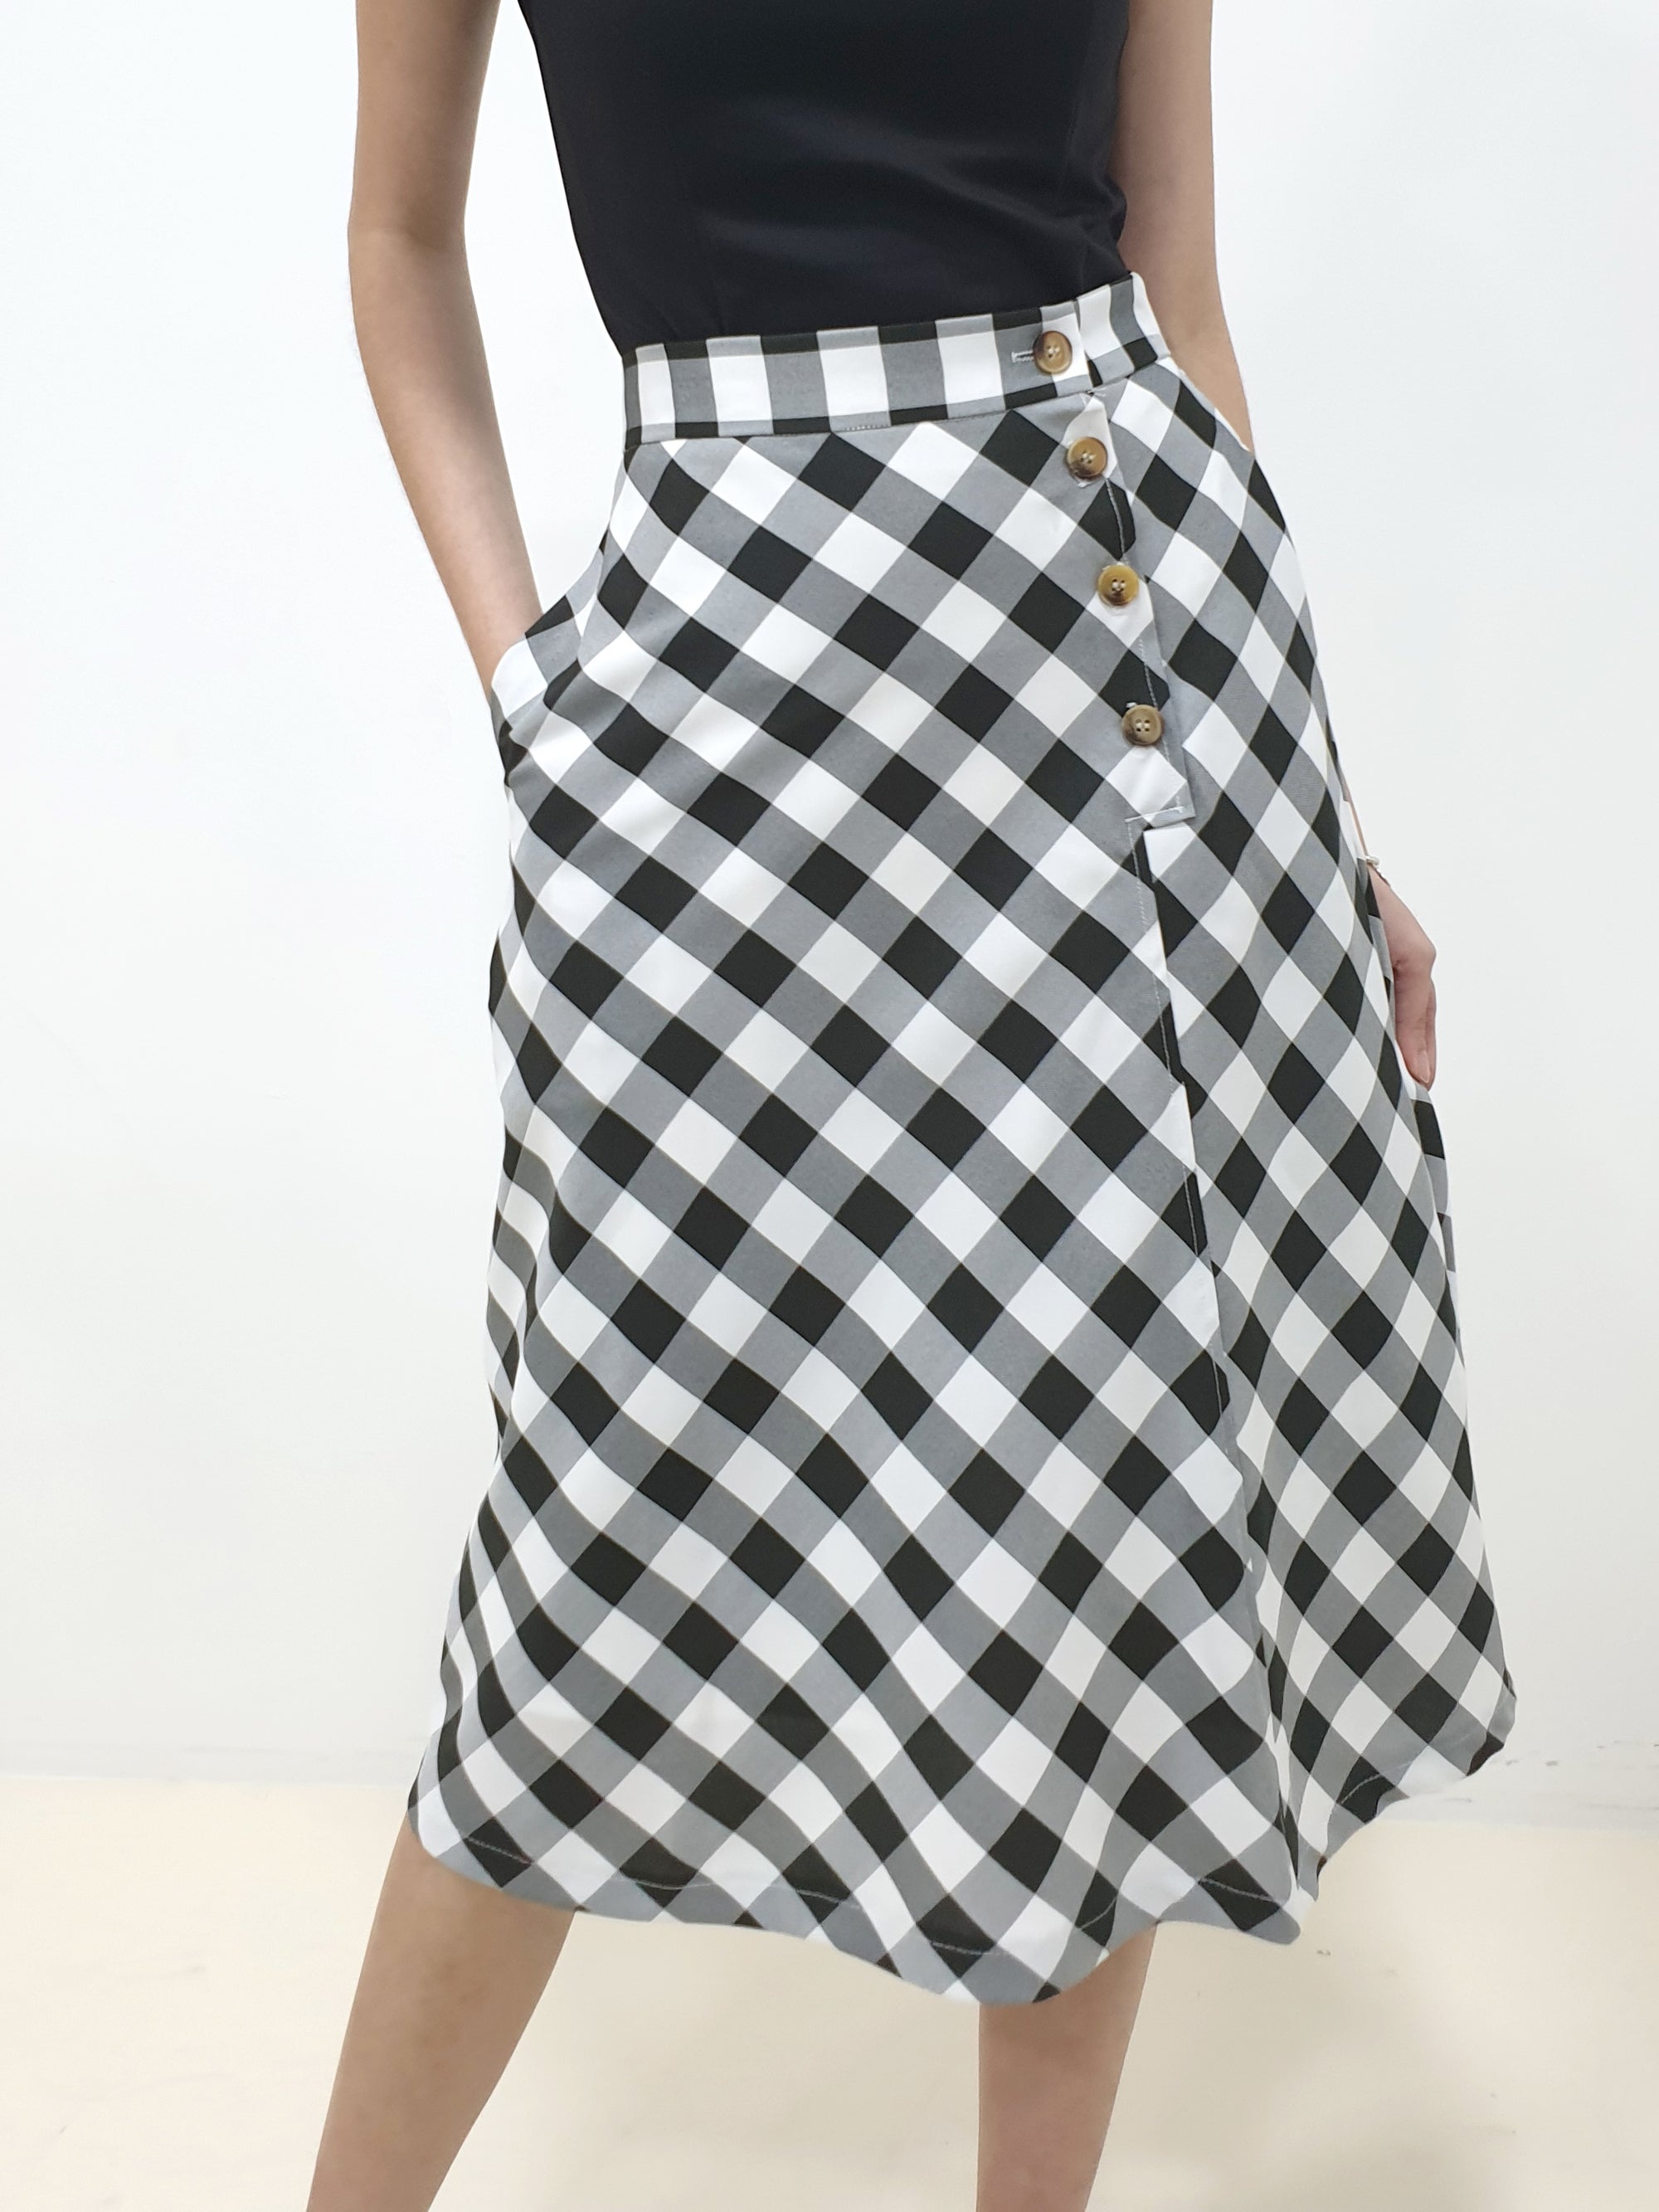 Buttons Checkered Skirt (Non-returnable) - Ferlicious